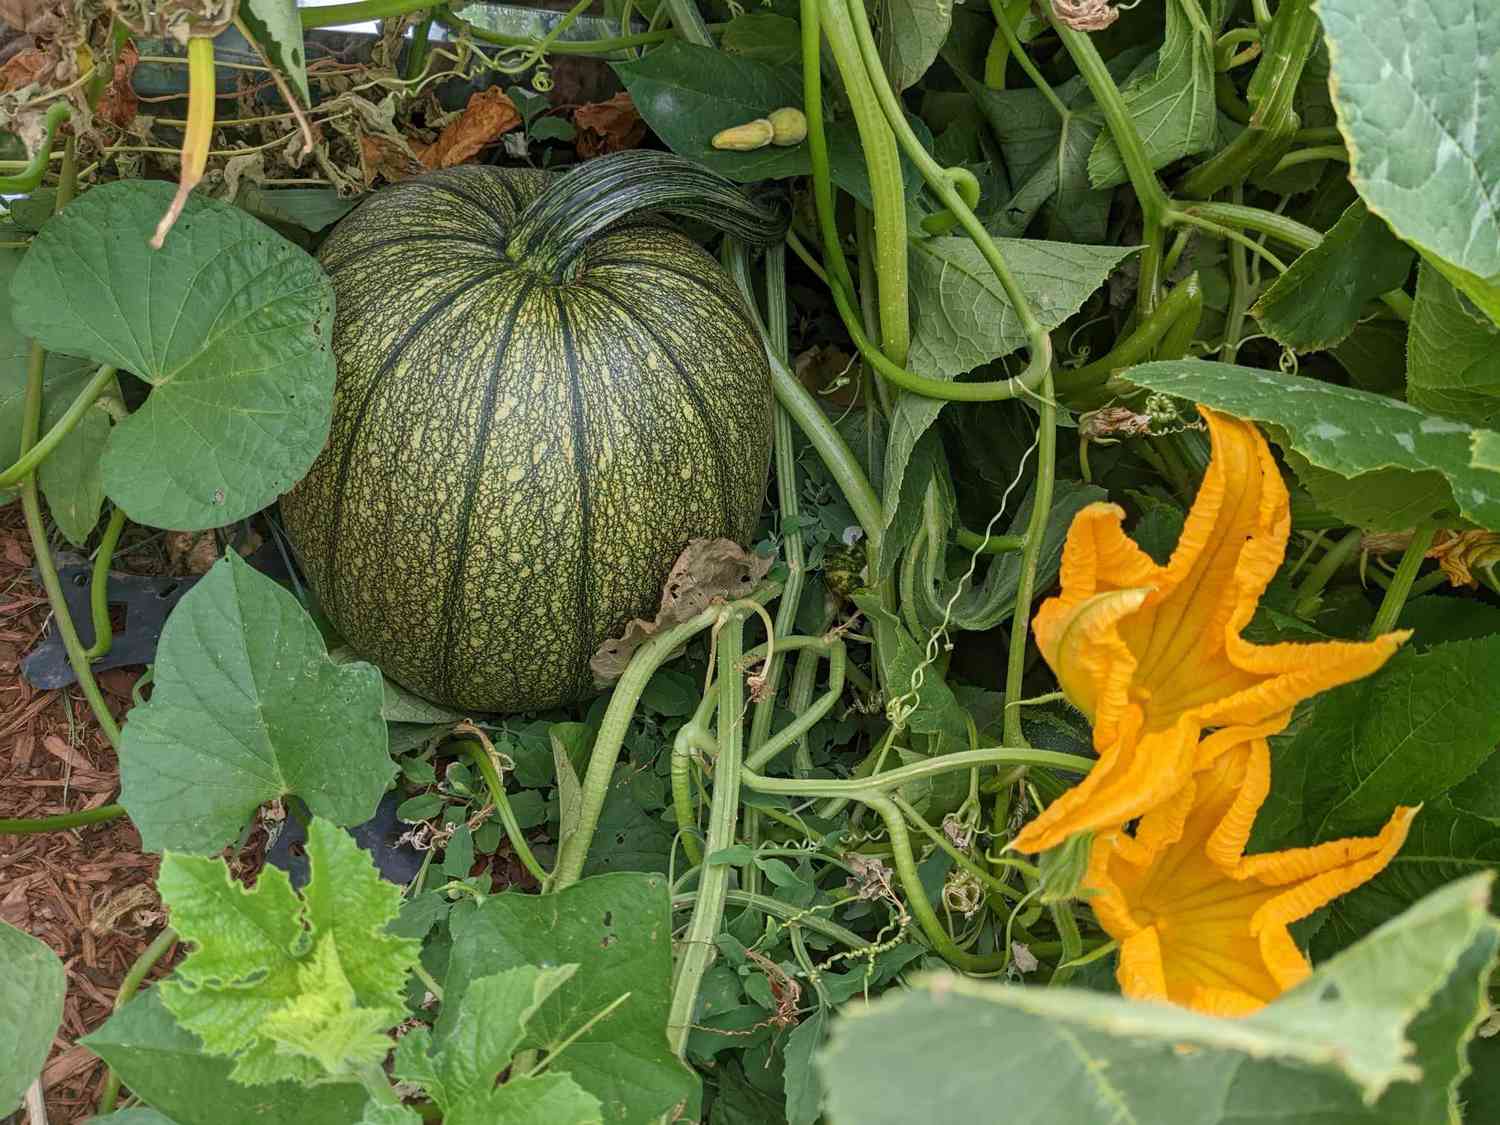 Pumpkin growing in a garden